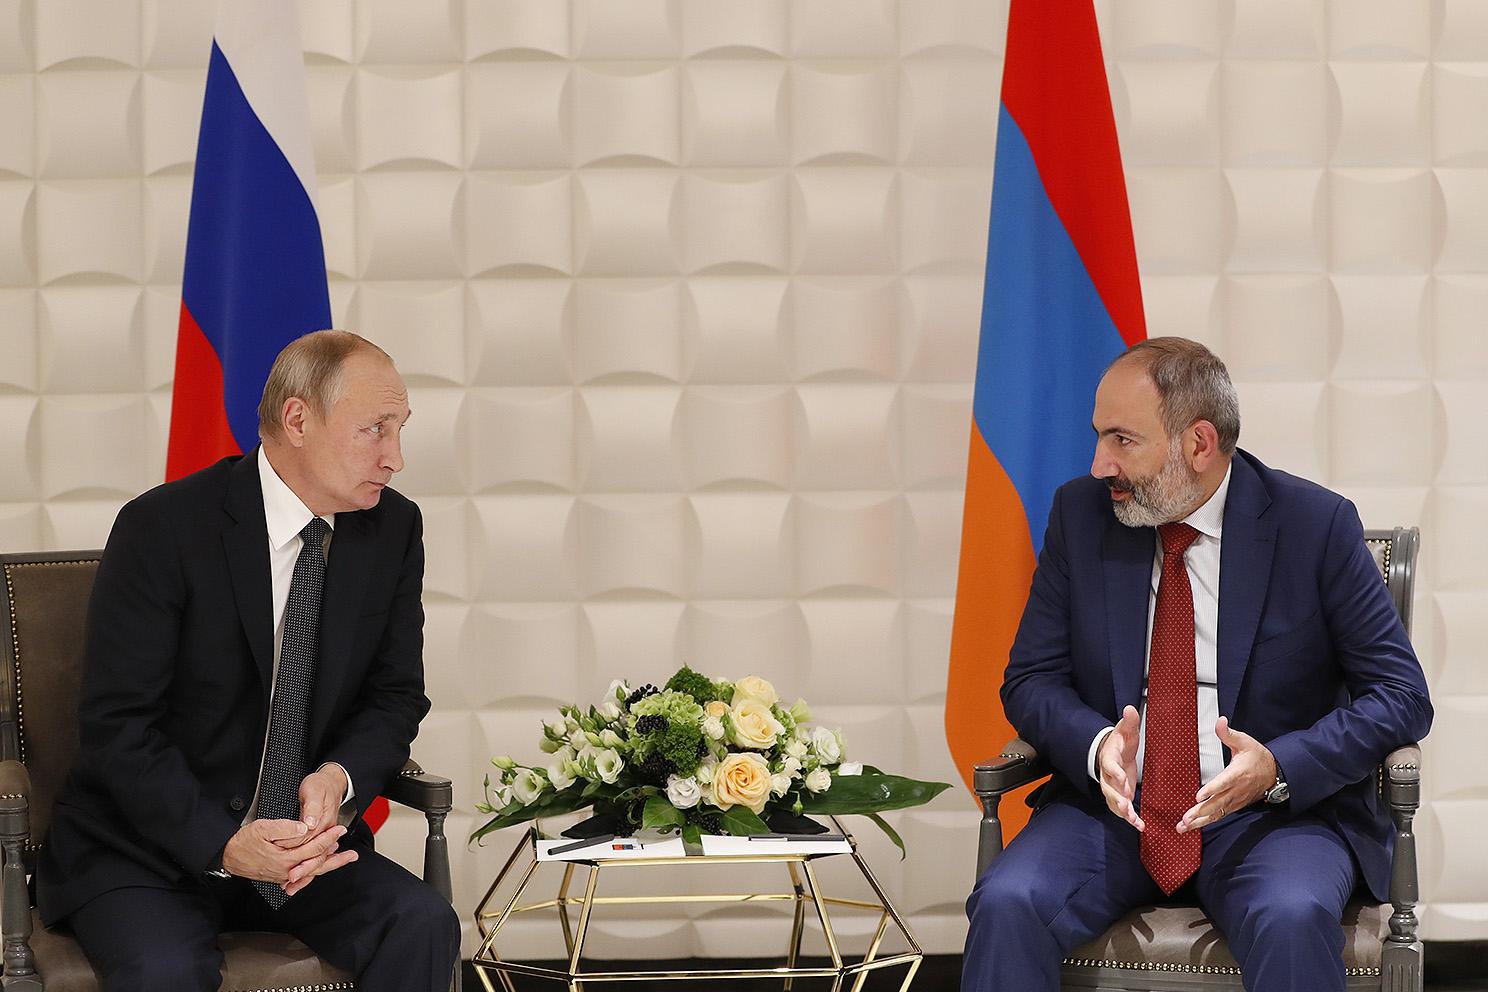 Никол Пашинян и Владимир Путин обсуждали газовую тематику – пресс-секретарь